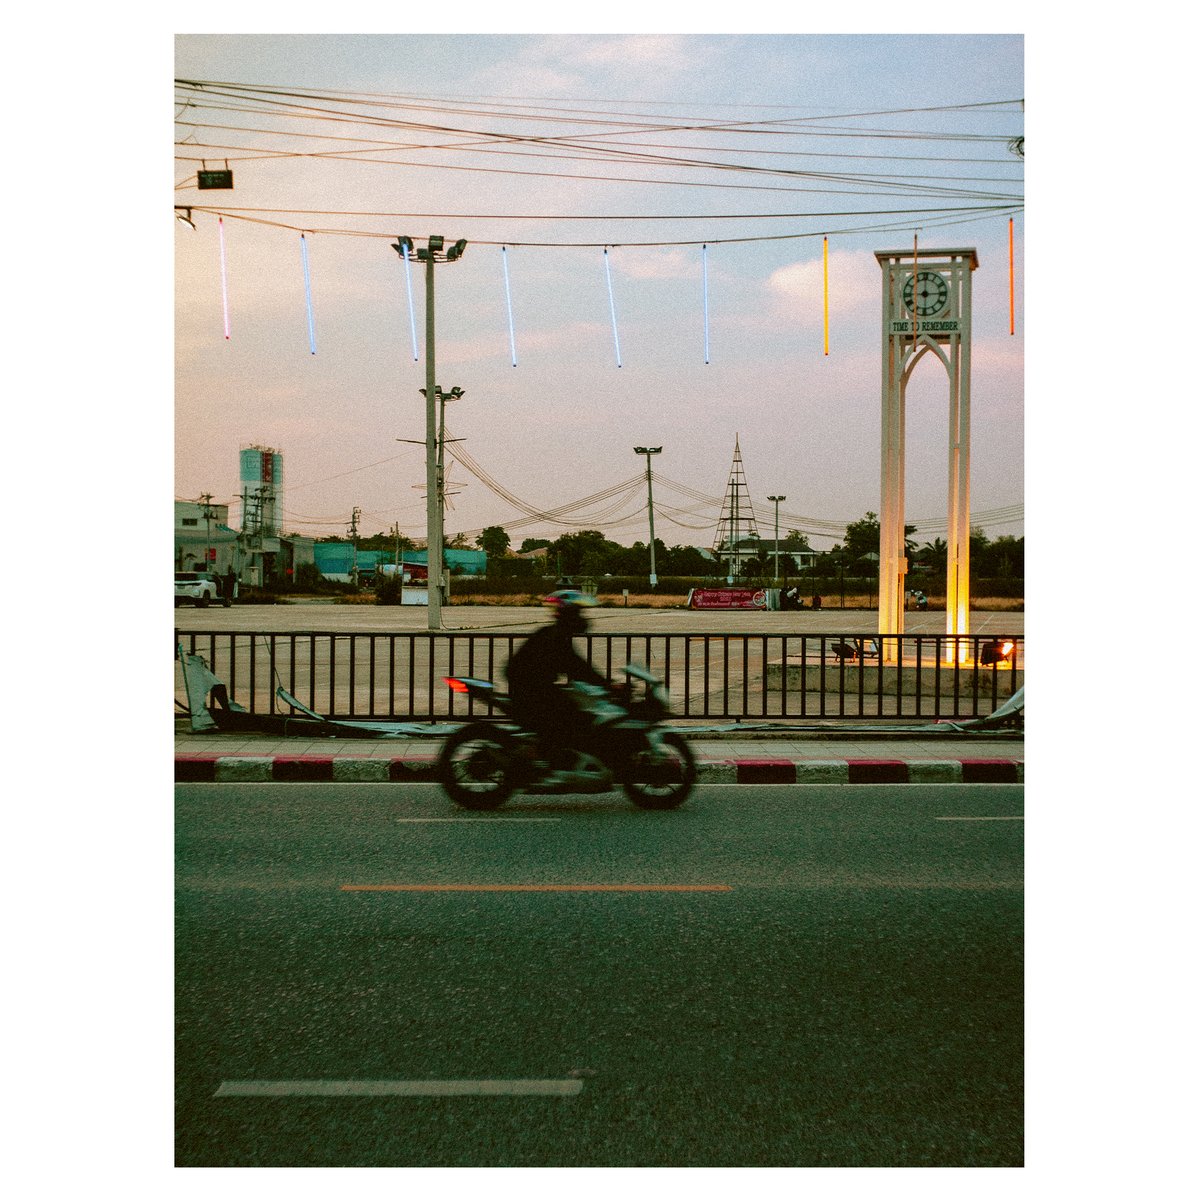 THAILAND AND ME
>
>
>
>
>
>
#M43
#GF2
#microfourthirds
#Lumix
#Panasonic
#streetphotography
#filmlook
#photosfilmlook
#Thailand
#minimal